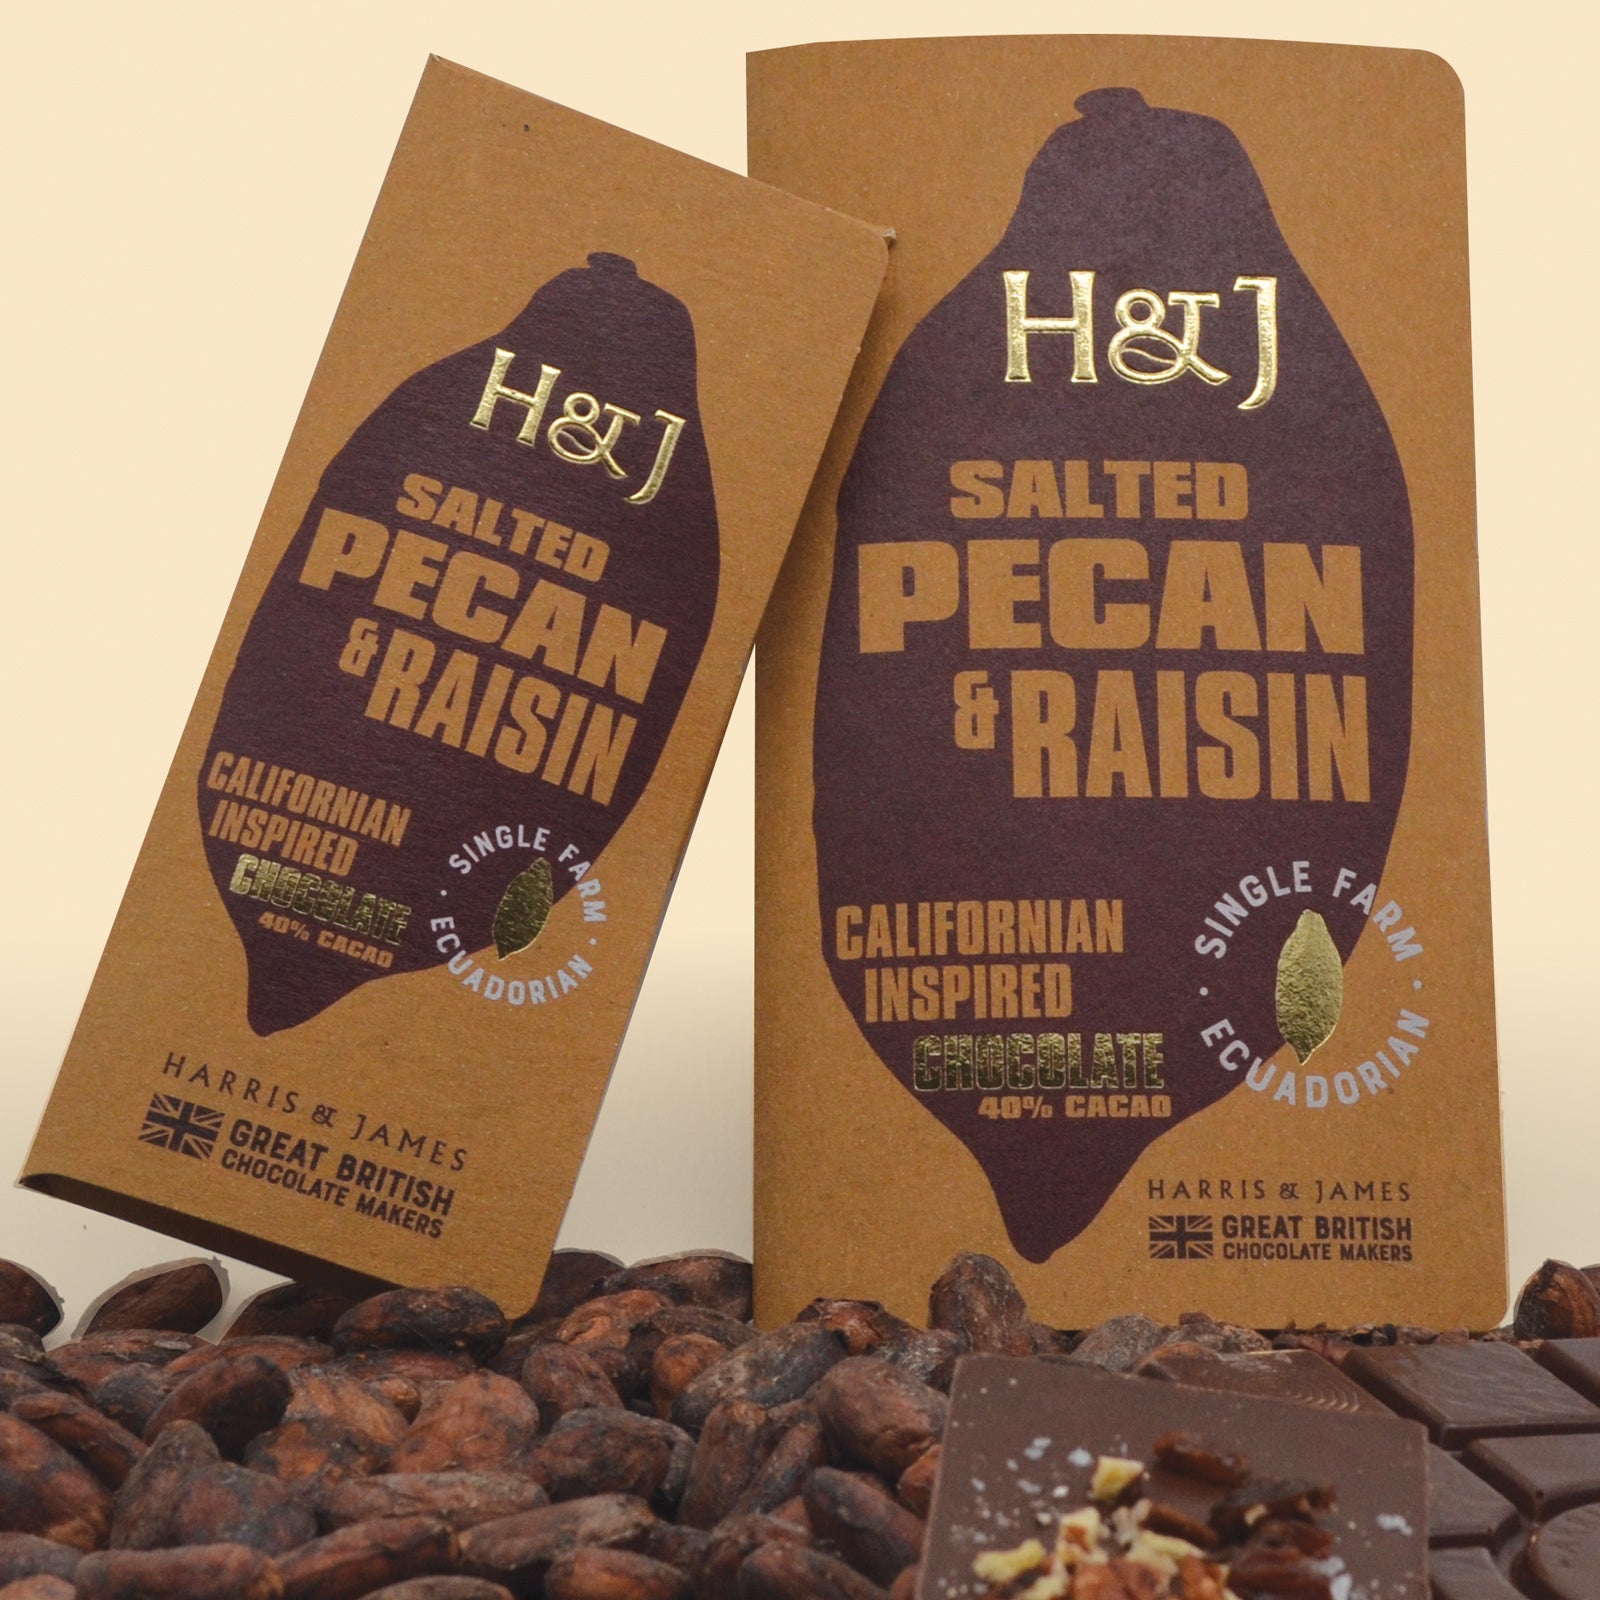 Pecan & Raisin Chocolate Bar